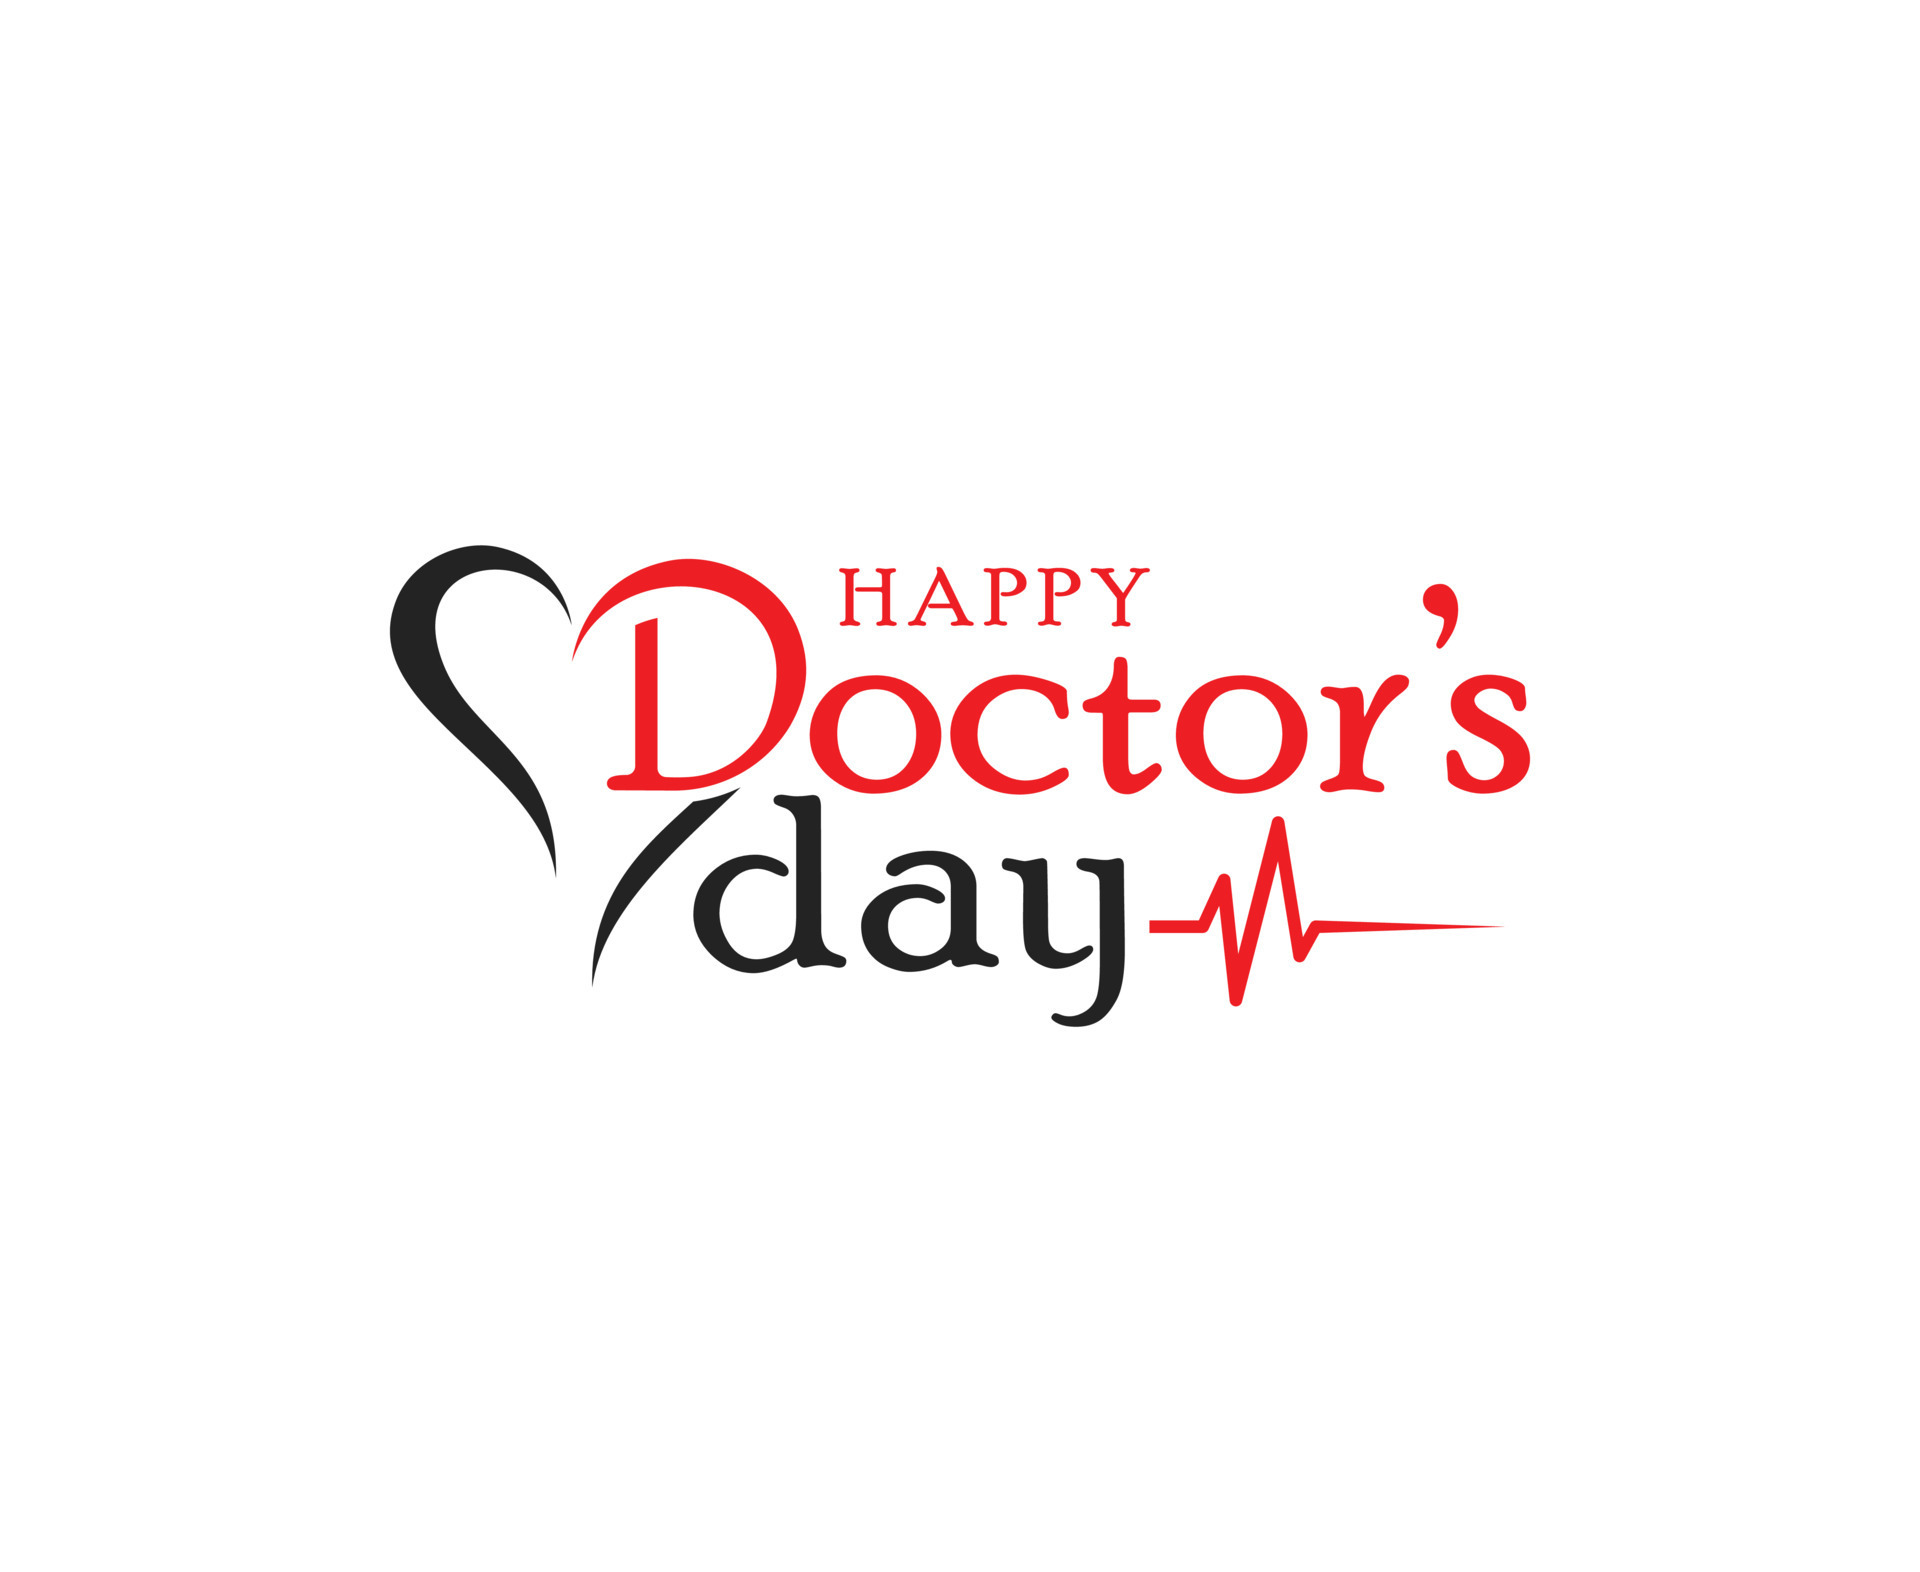 World, international happy Doctor's Day flat vector logo design